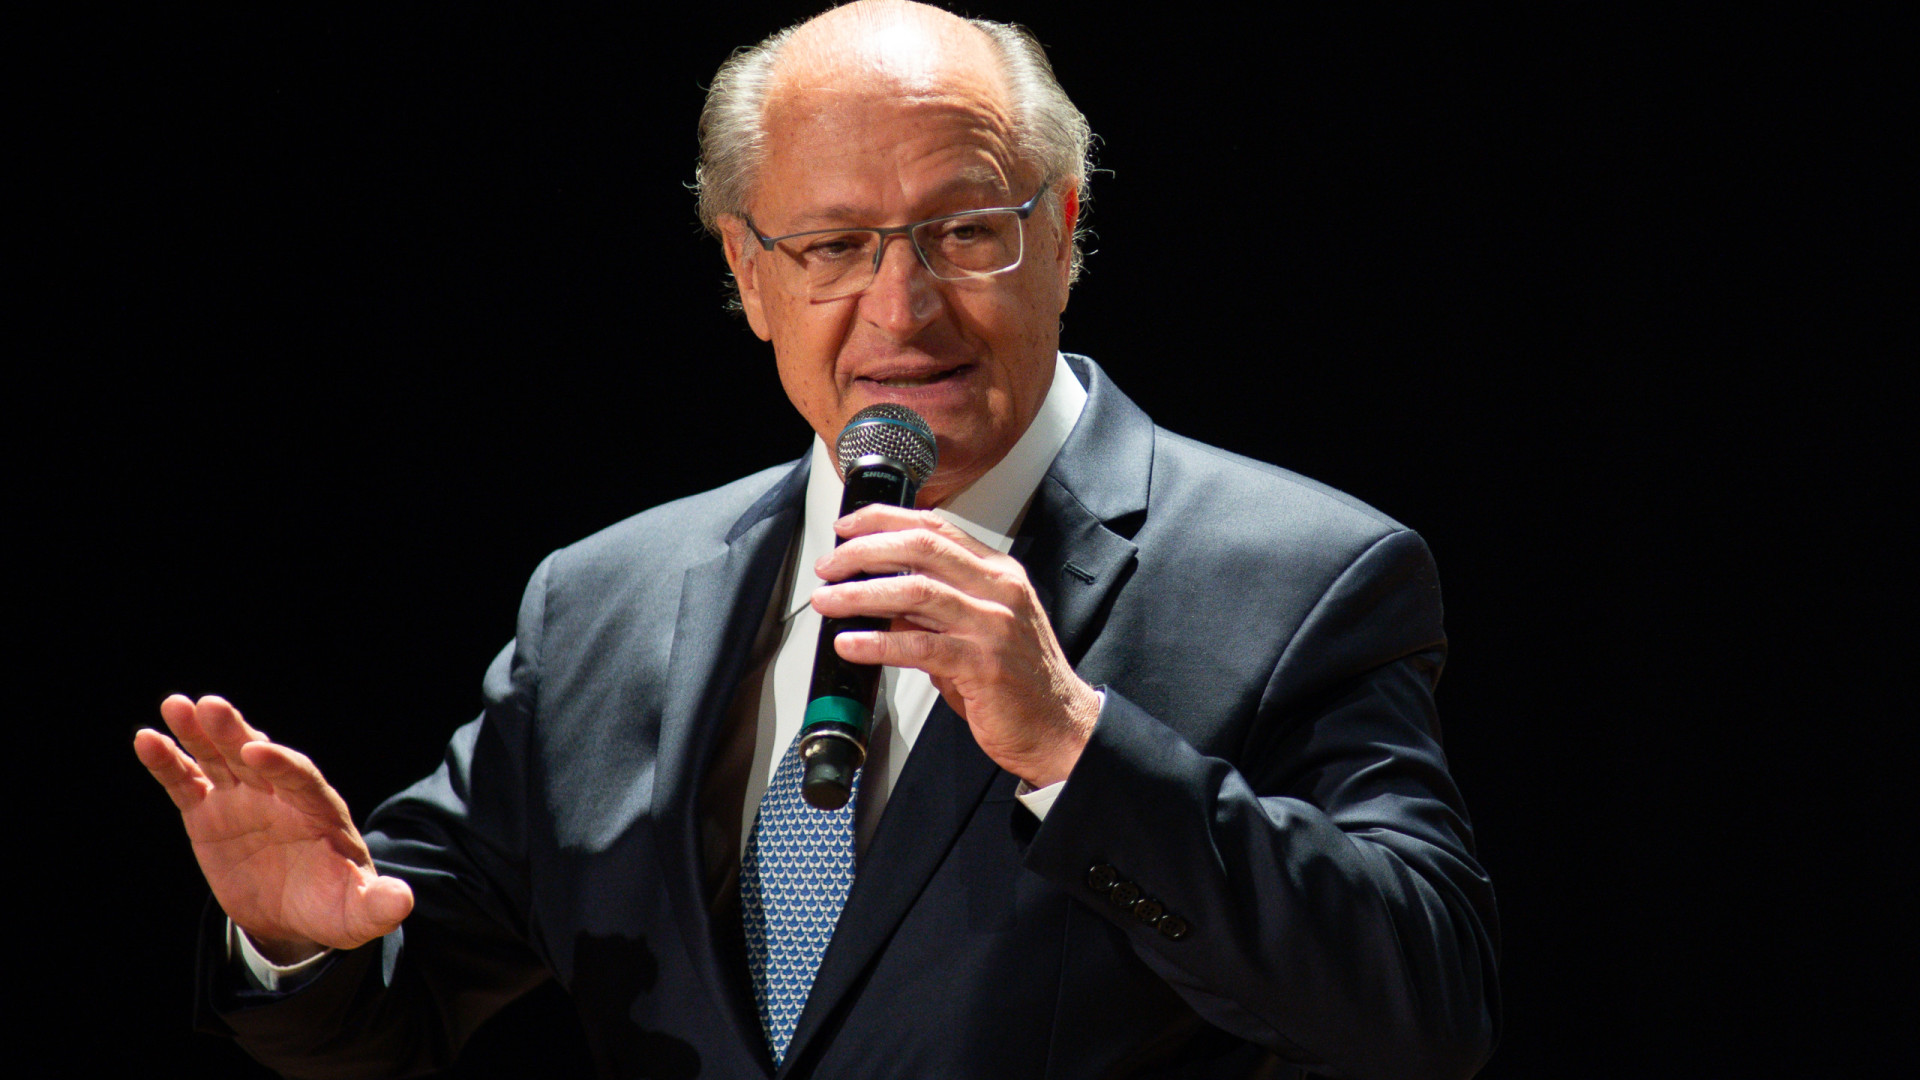 Alckmin Comemora Aprovação de Reforma Tributária sem “Toma lá, dá cá”